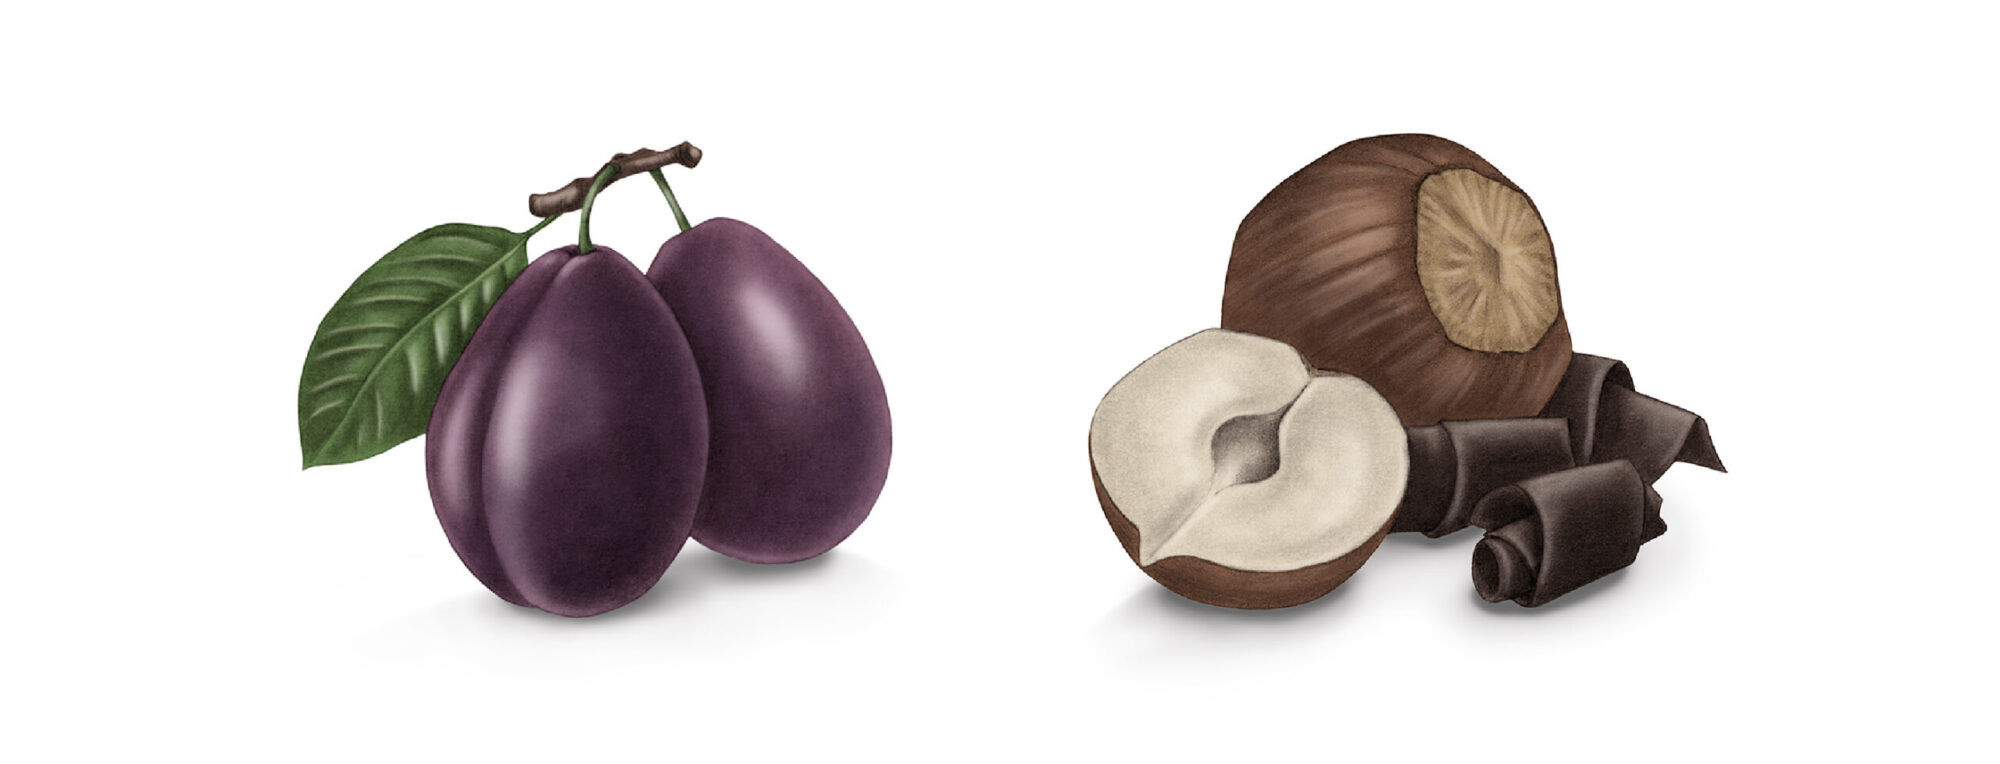 giulia-borsi-illustration-label-design-plums-hazelnuts-chocolate